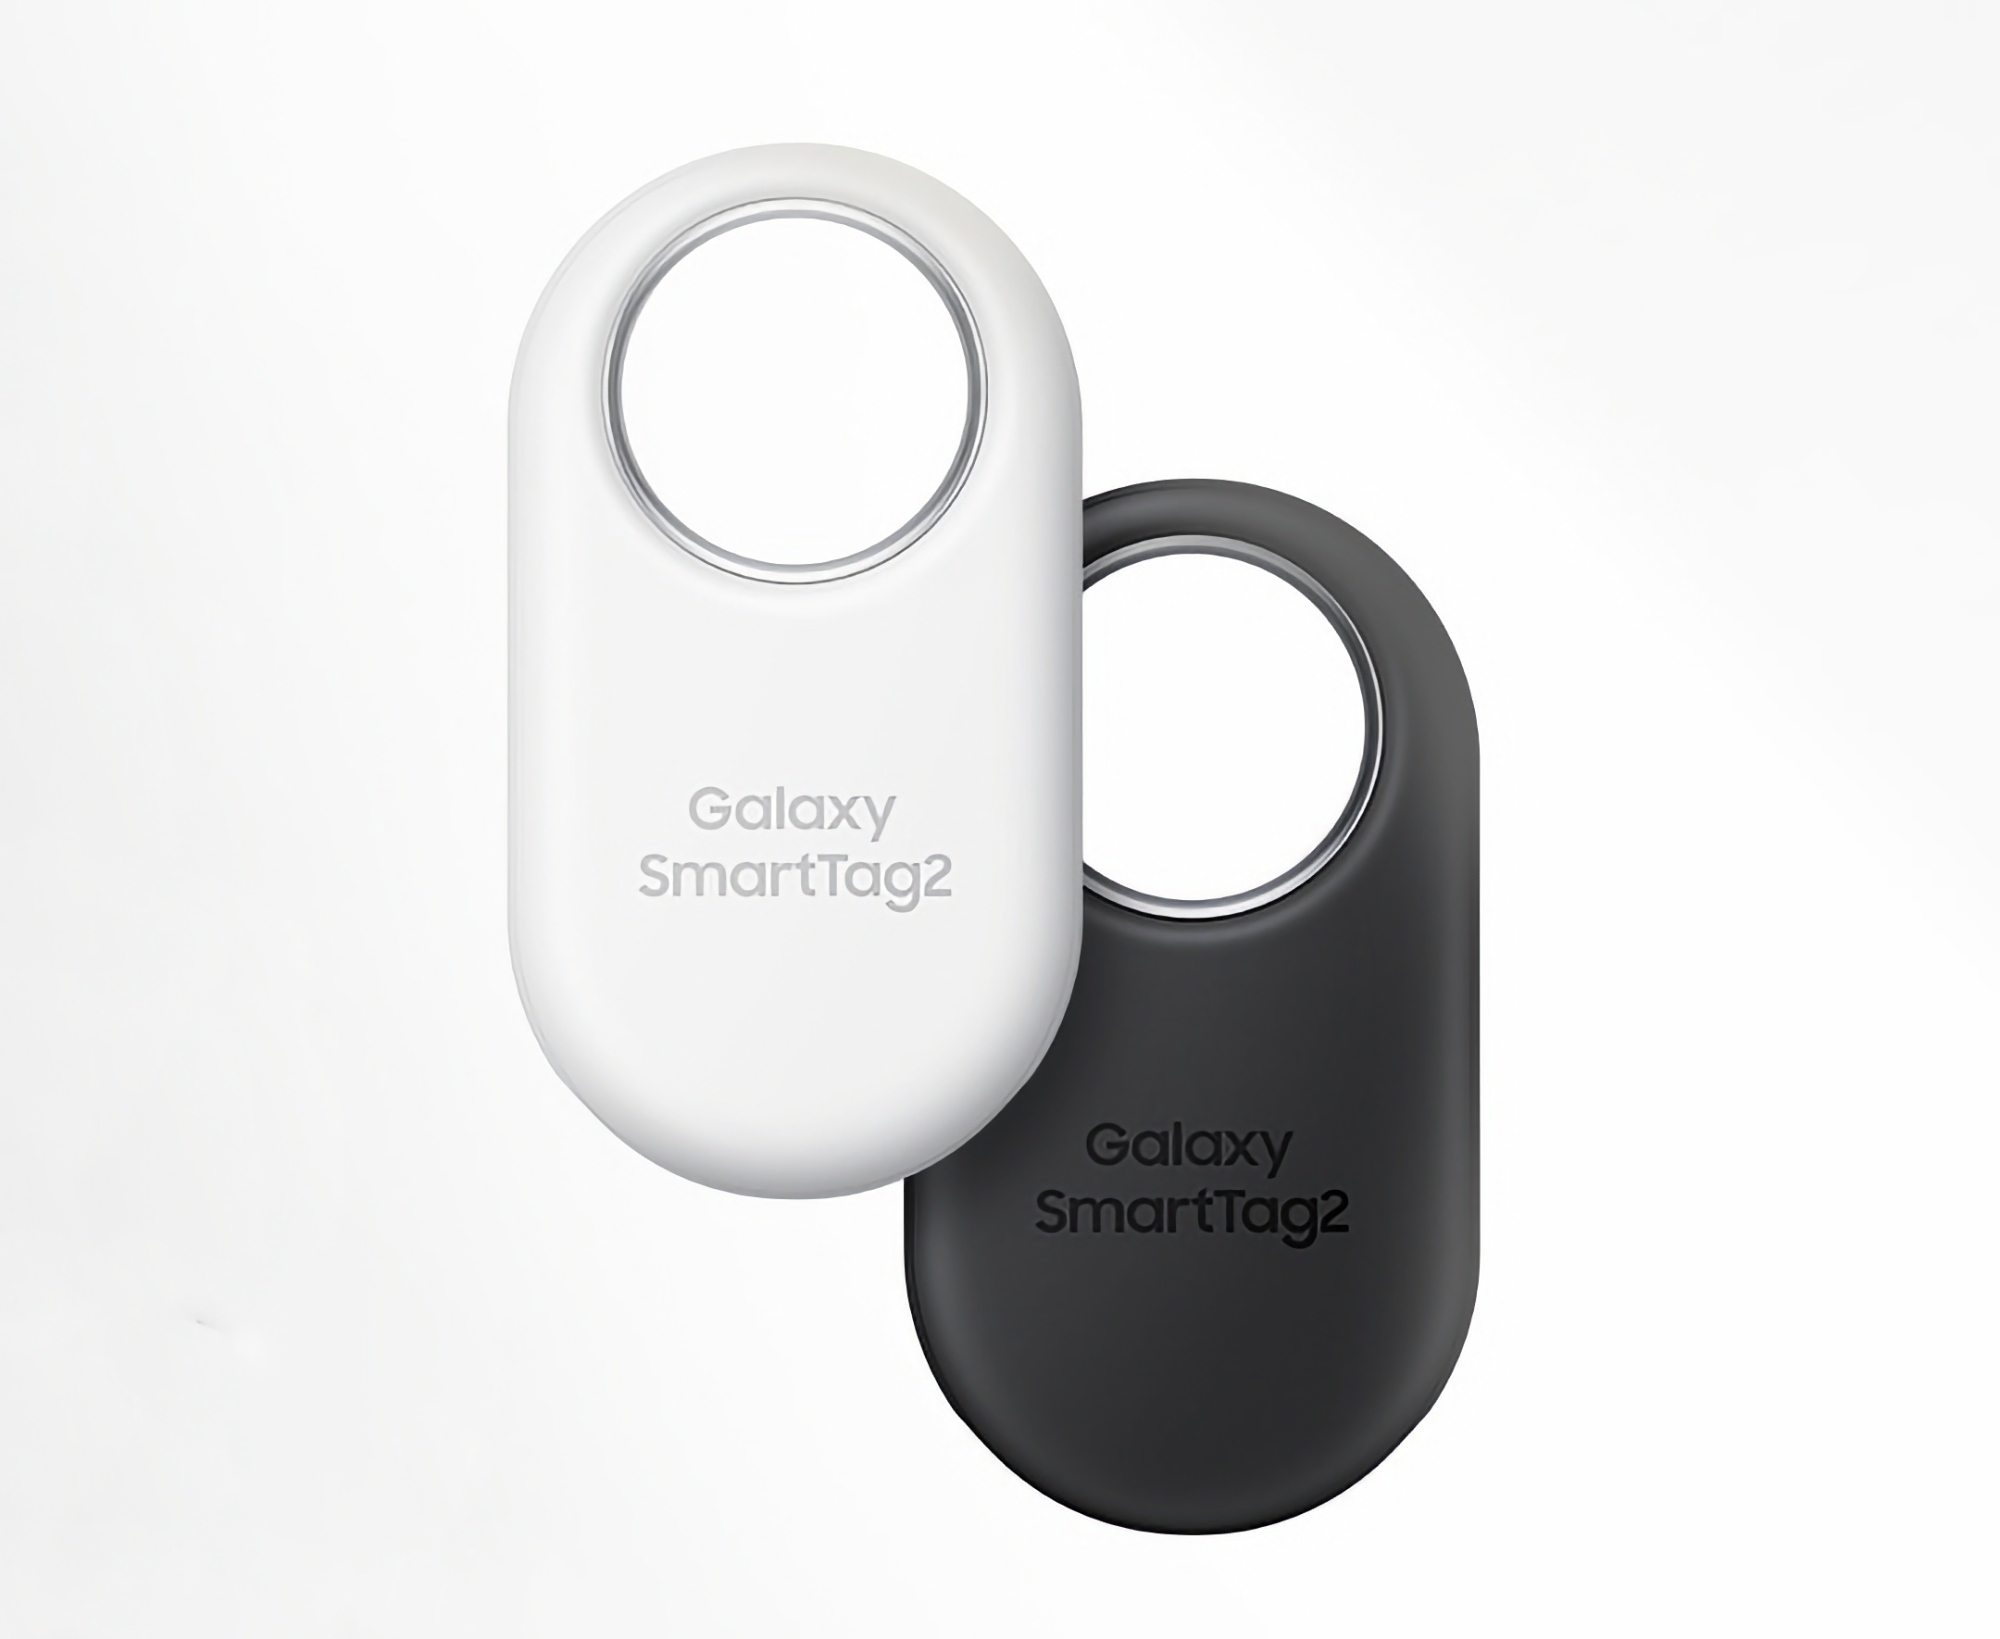 Samsung Galaxy SmartTag 2 kan kjøpes på Amazon til en kampanjepris